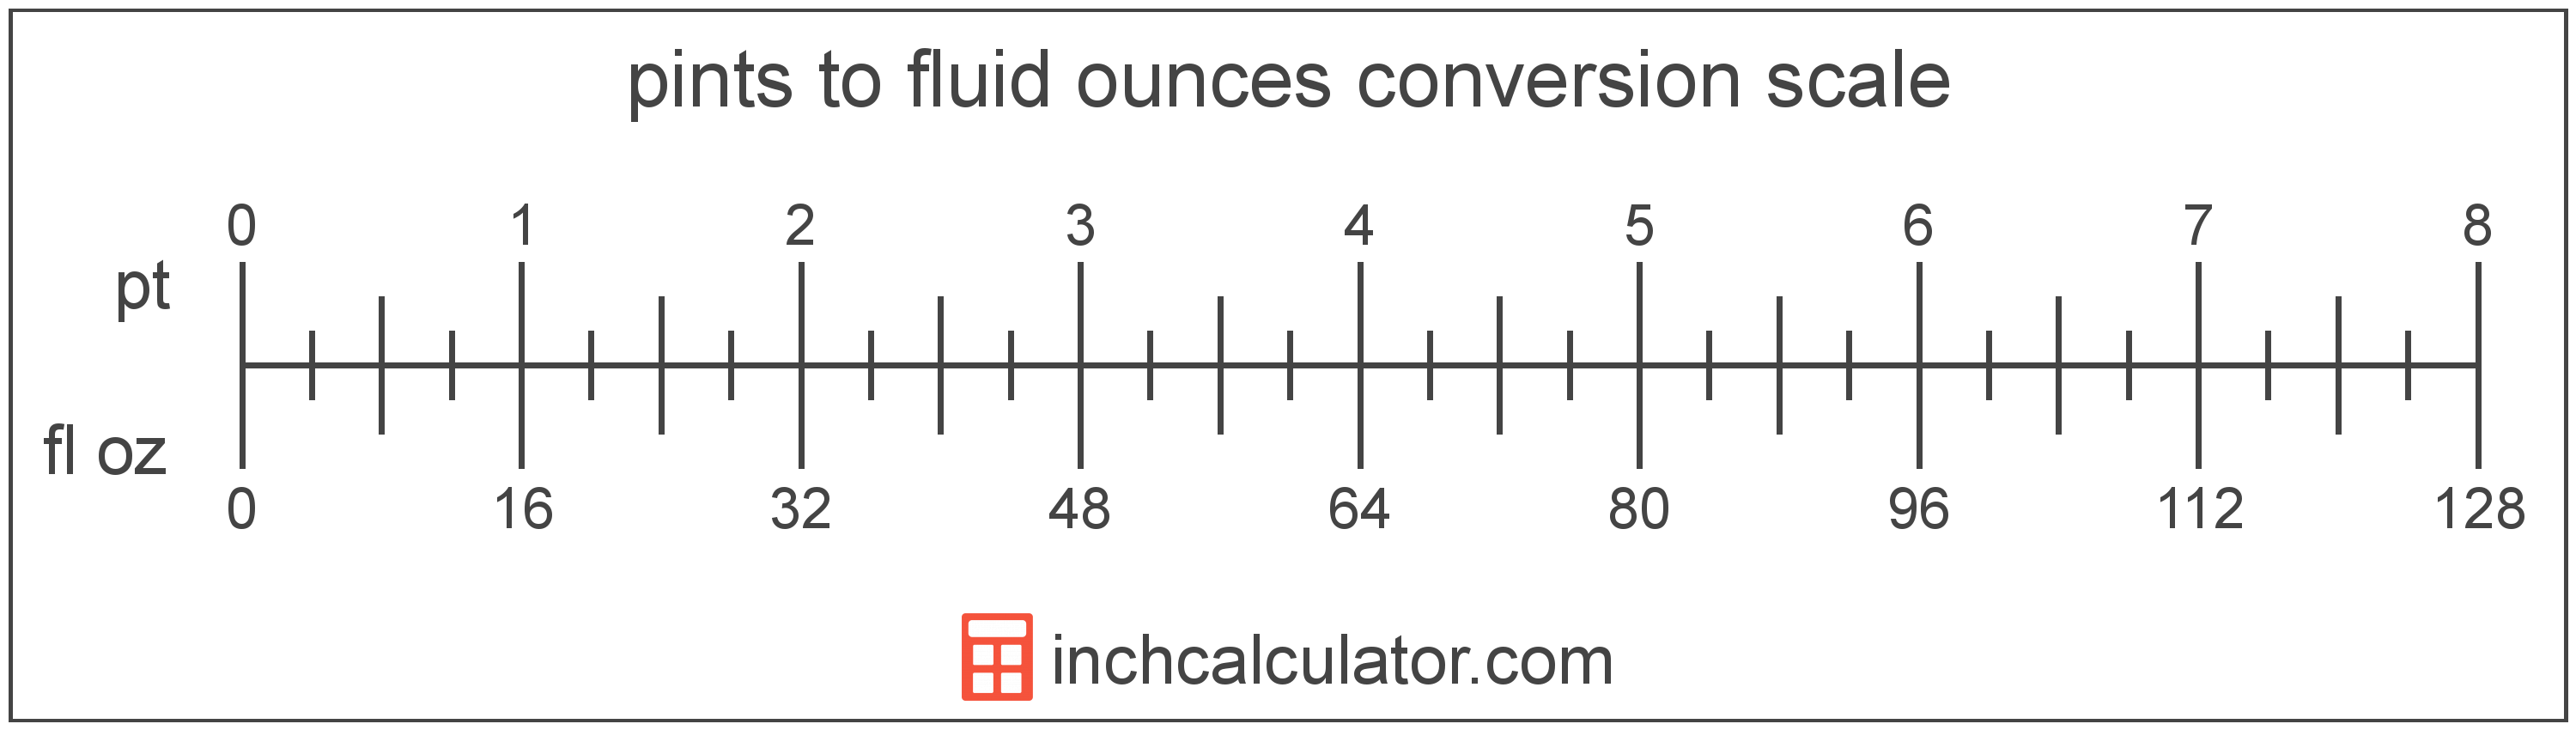 conversion scale showing pints and equivalent fluid ounces volume values